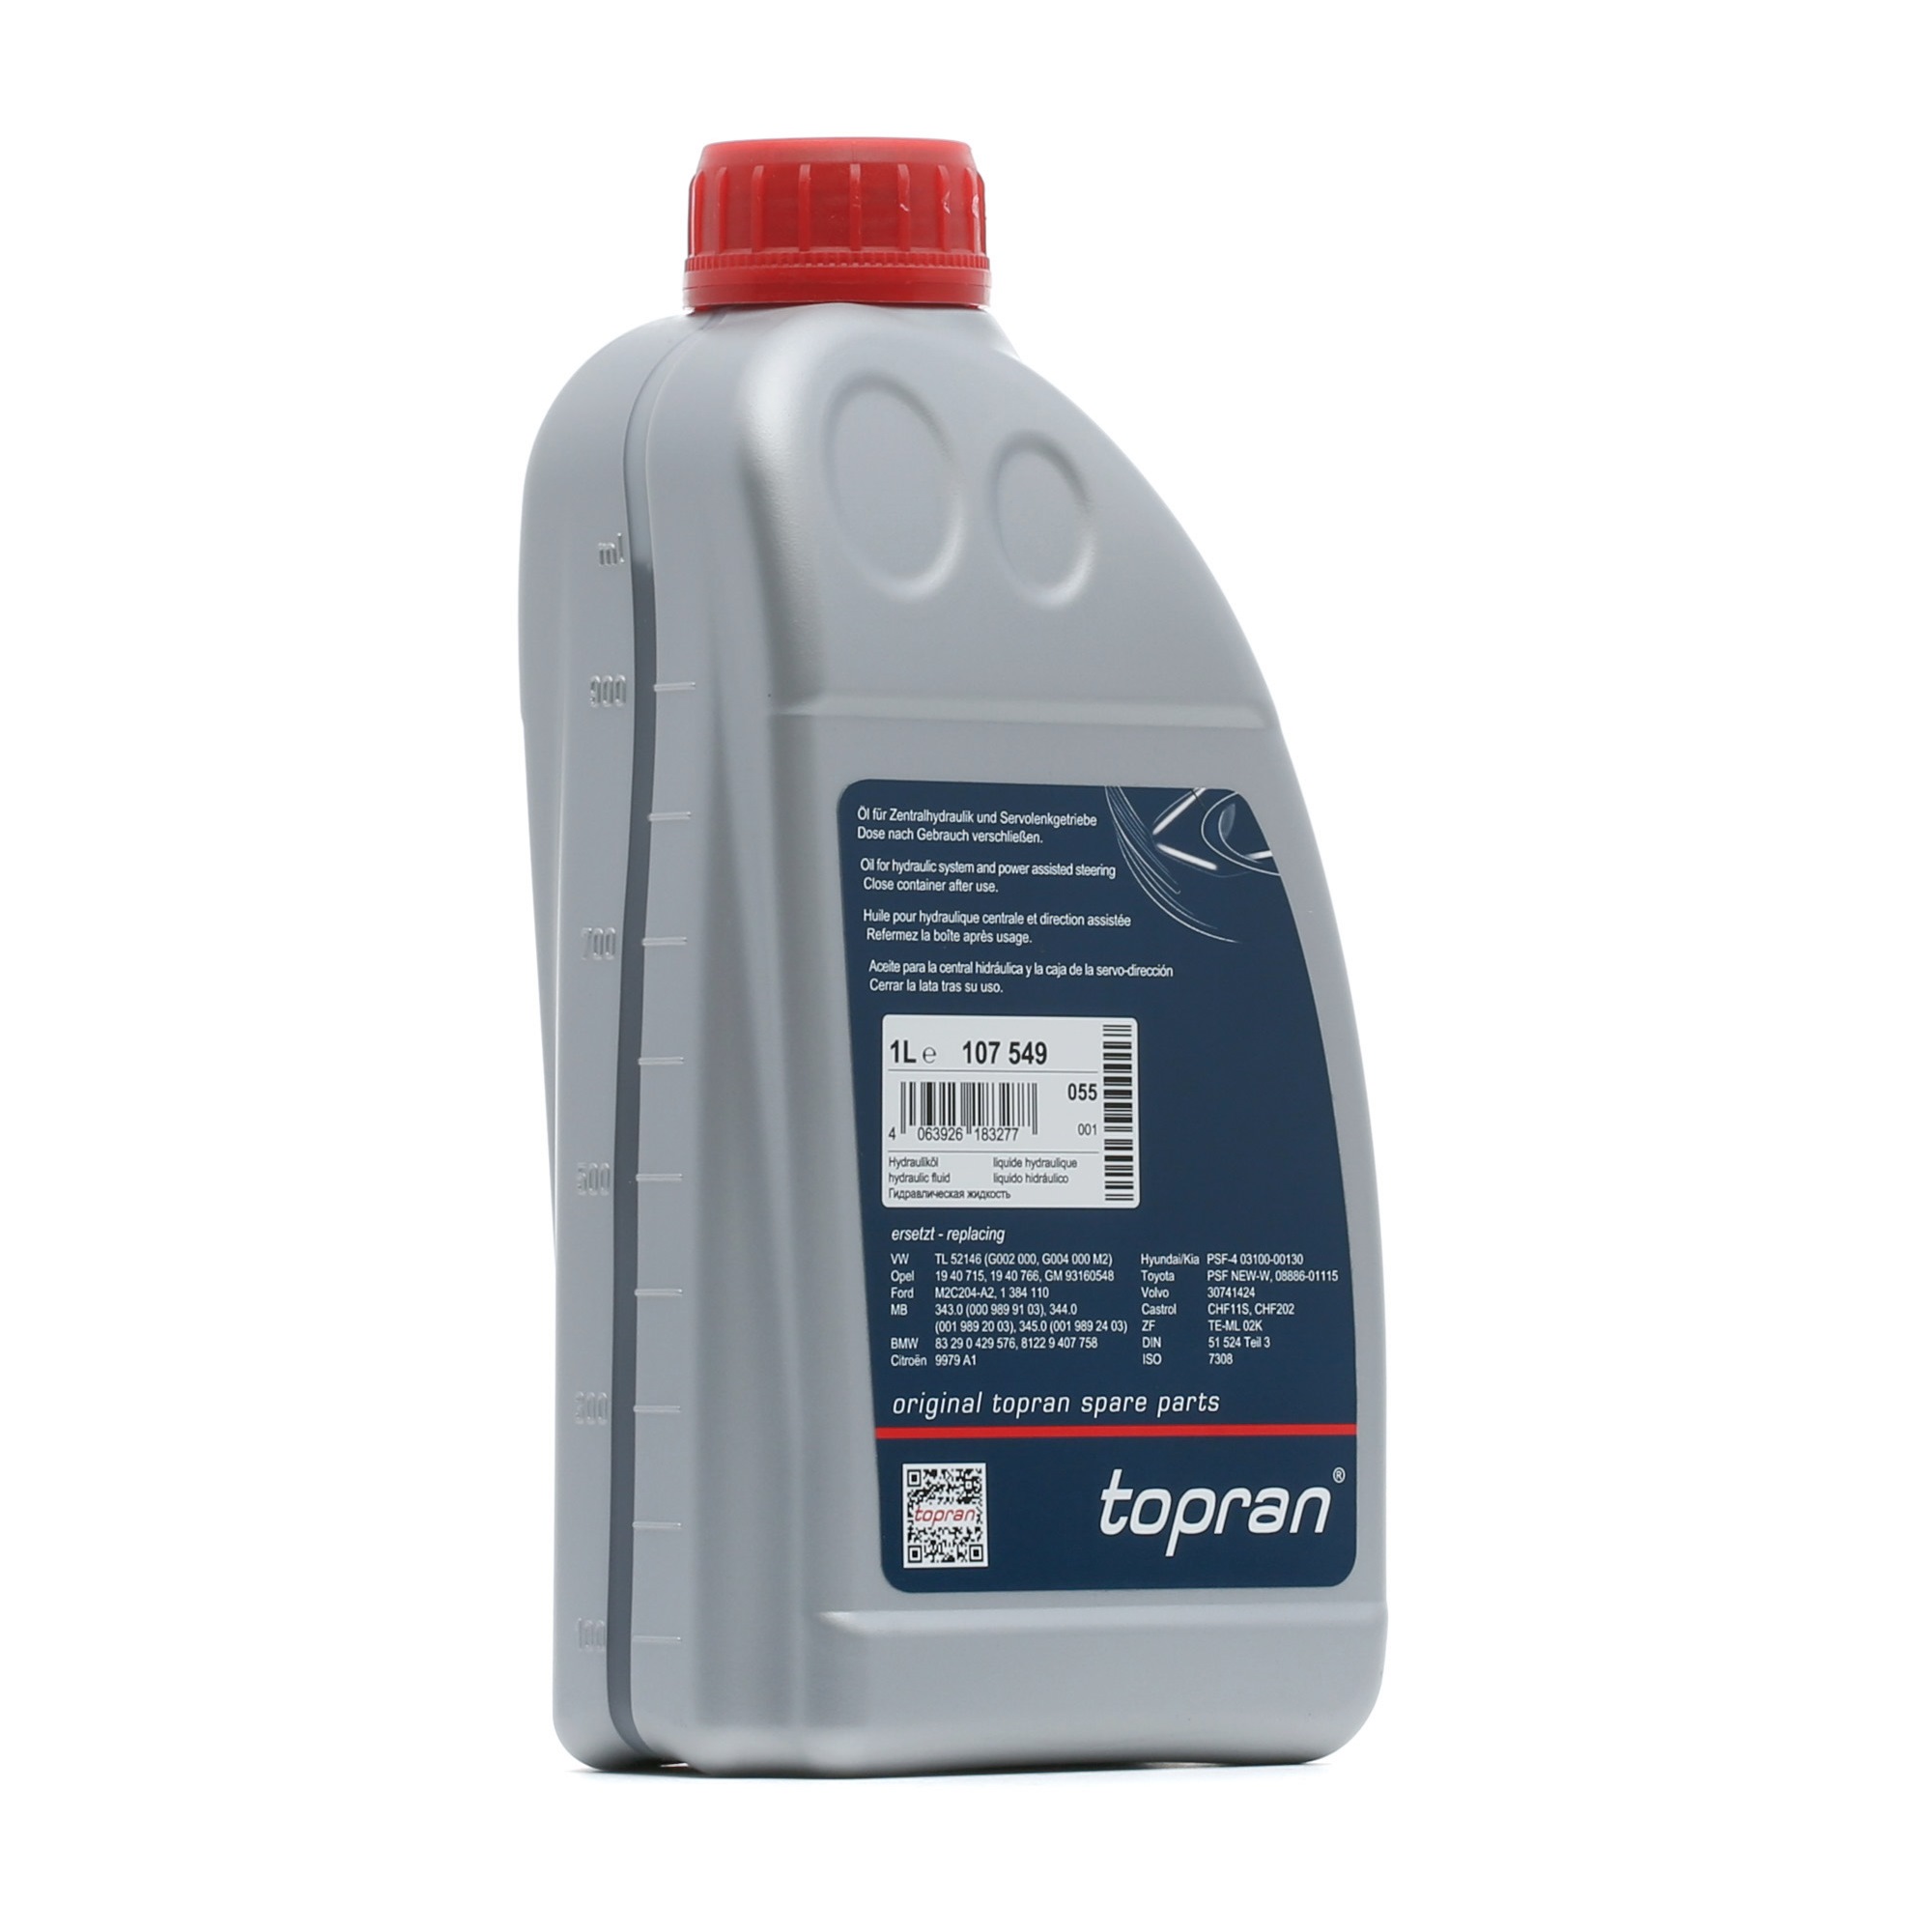 TOPRAN 107549 Hydraulic Oil 03100-00130